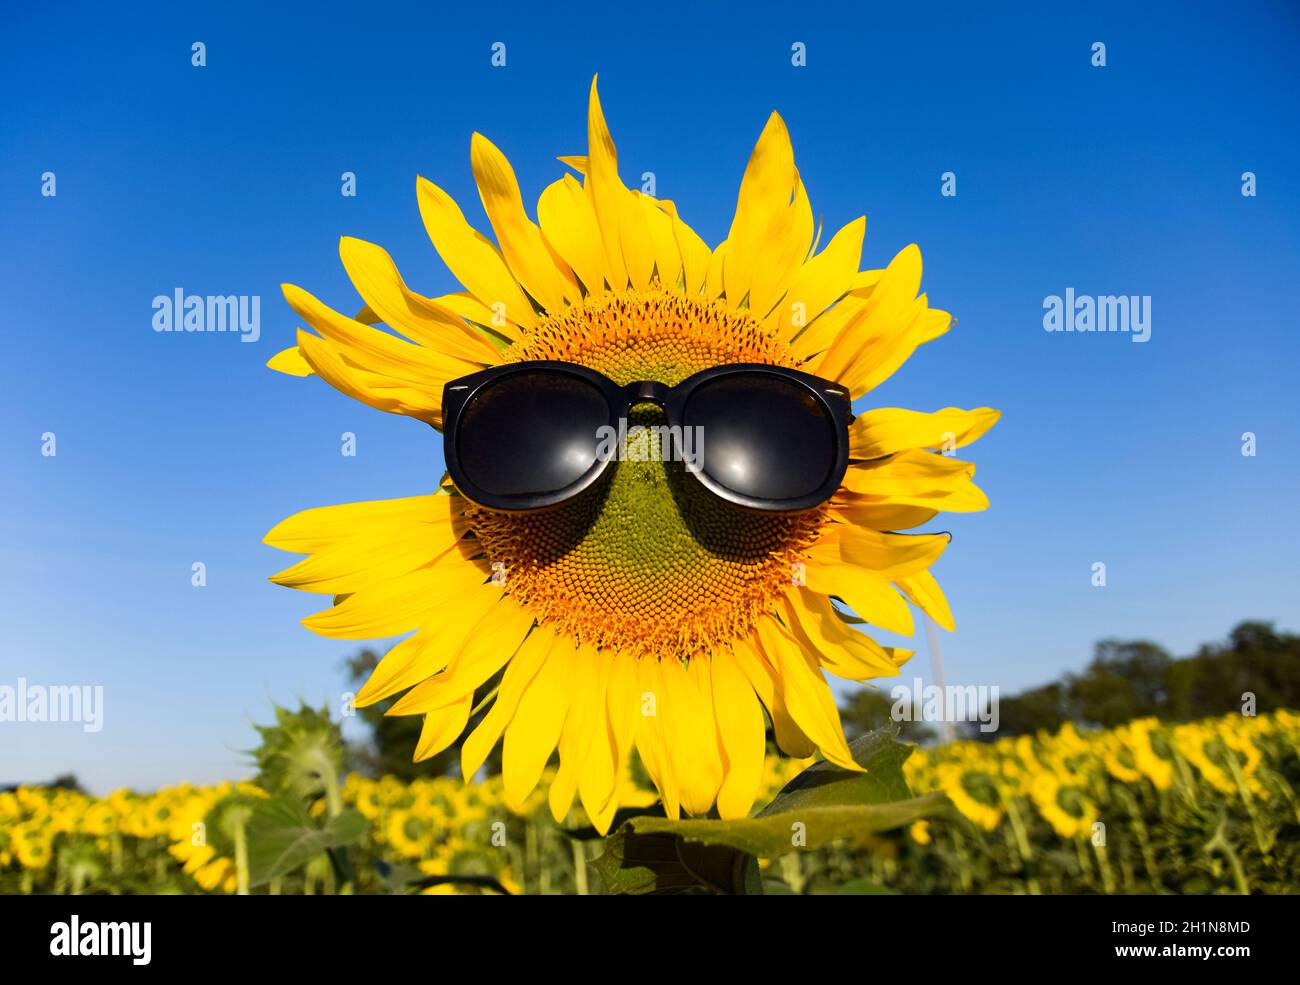 Sunflower in sunglasses. Sunglasses on a yellow flower of sunflower Stock Photo